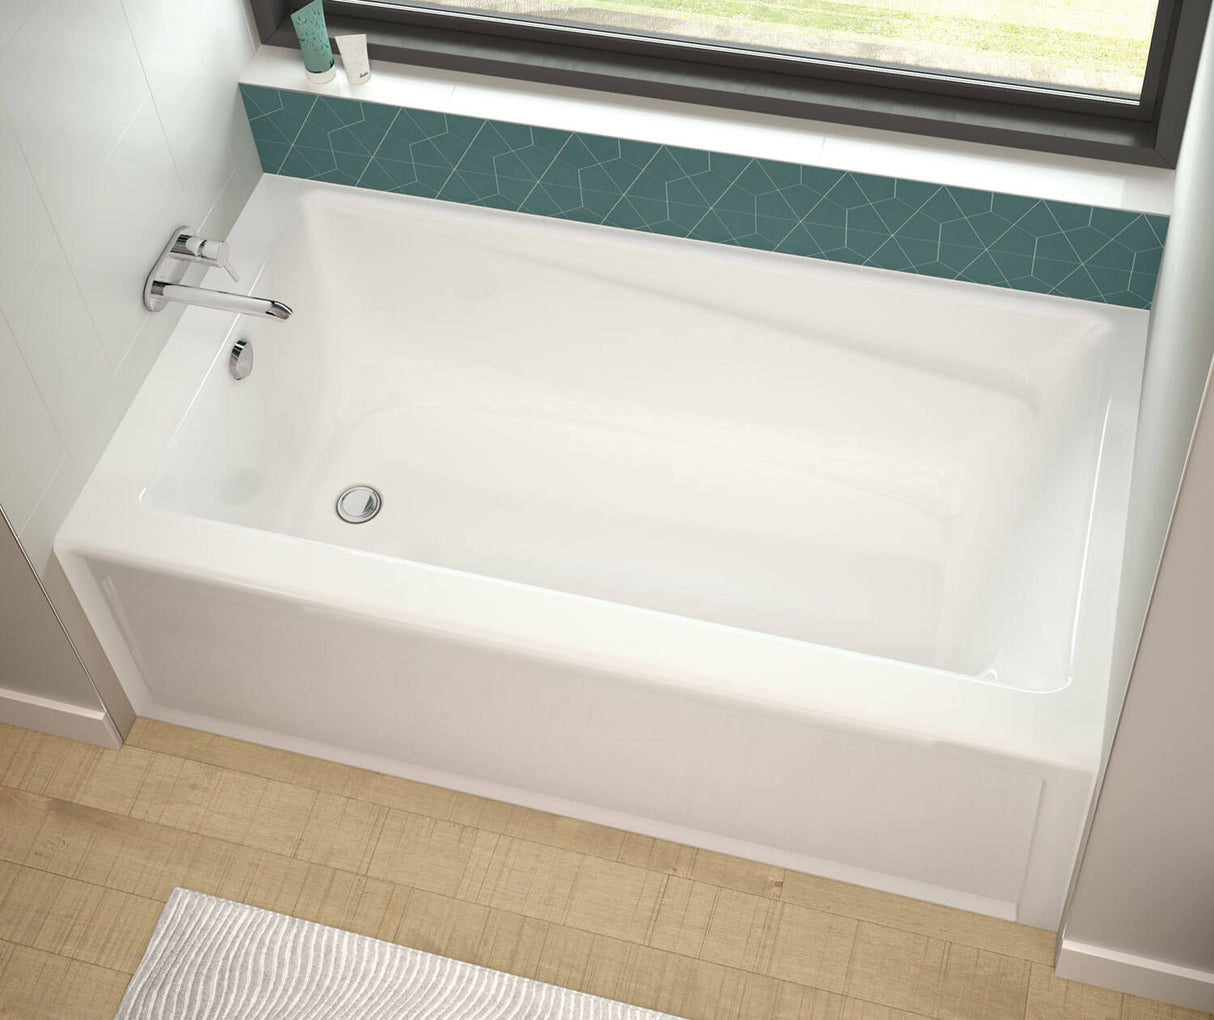 MAAX 105520-097-001-100 Exhibit 6032 IFS Acrylic Alcove Left-Hand Drain Combined Whirlpool & Aeroeffect Bathtub in White